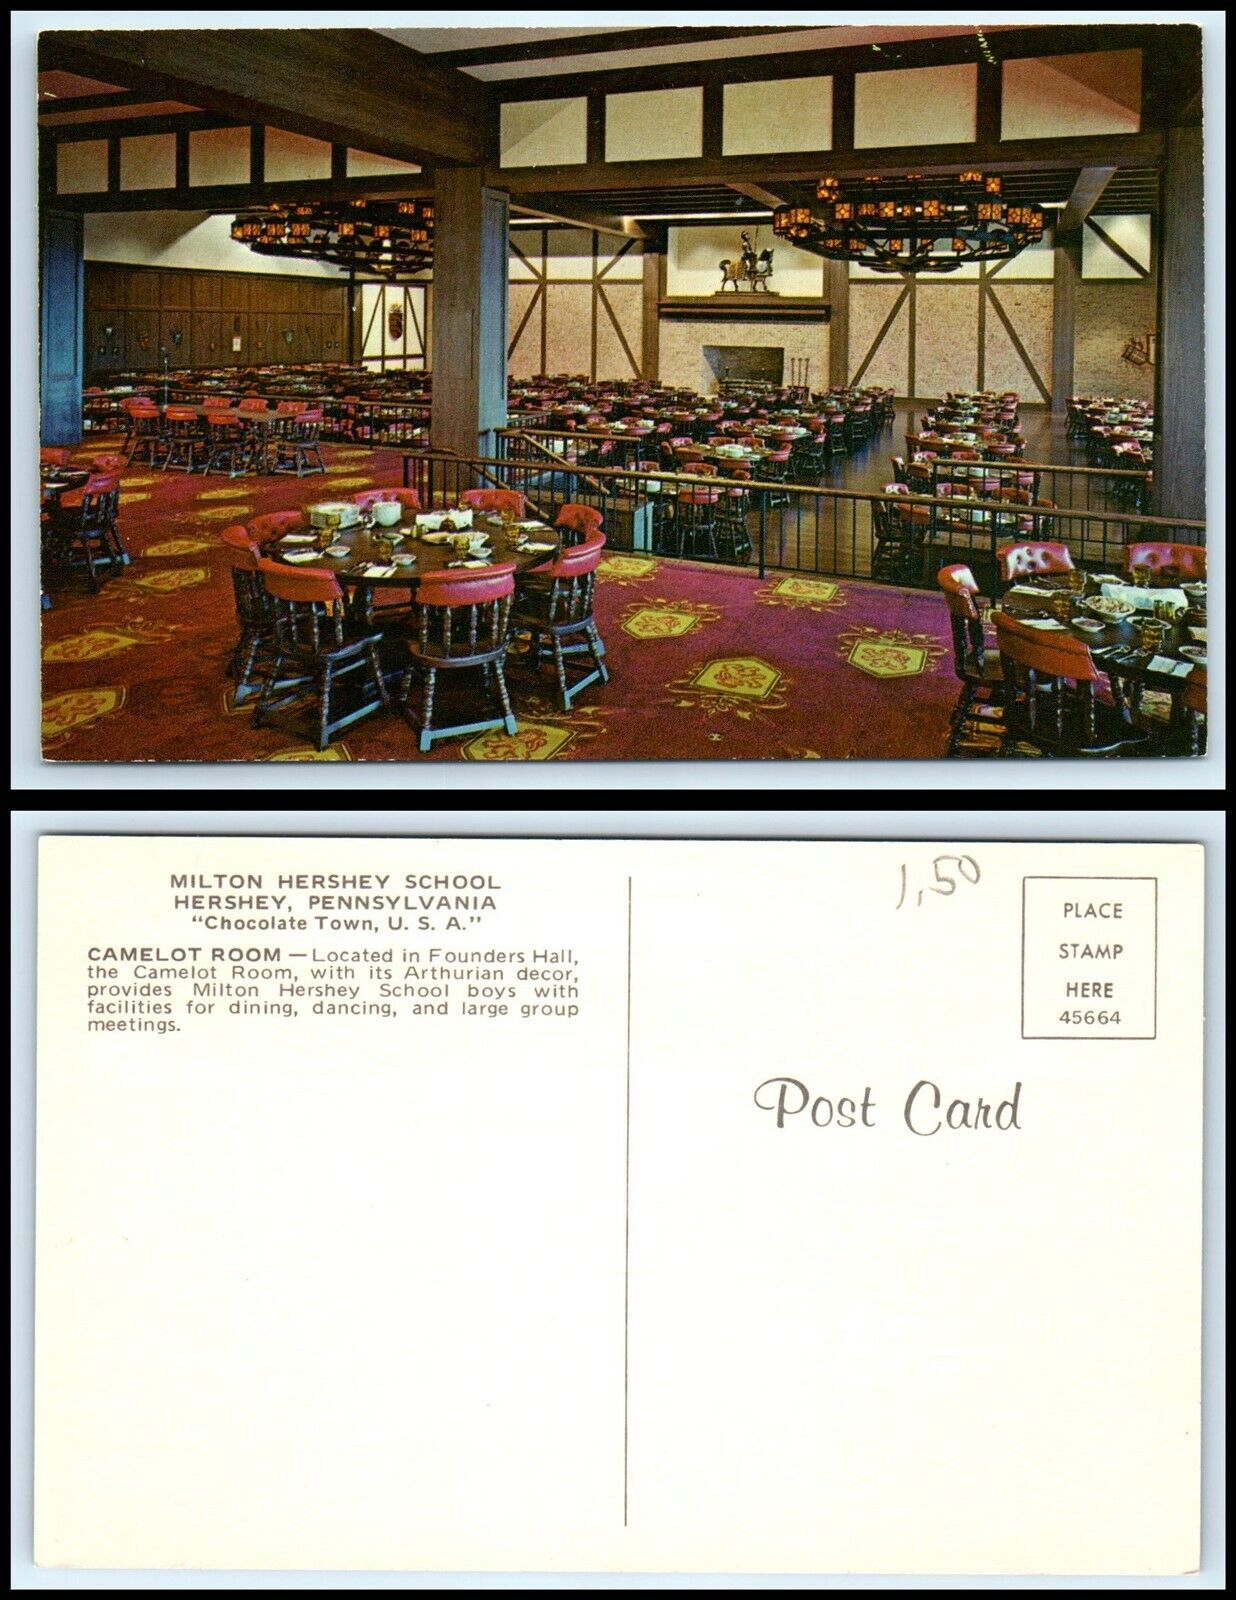 PENNSYLVANIA Postcard - Hershey, Milton Hershey School, Camelot Room Dining L30